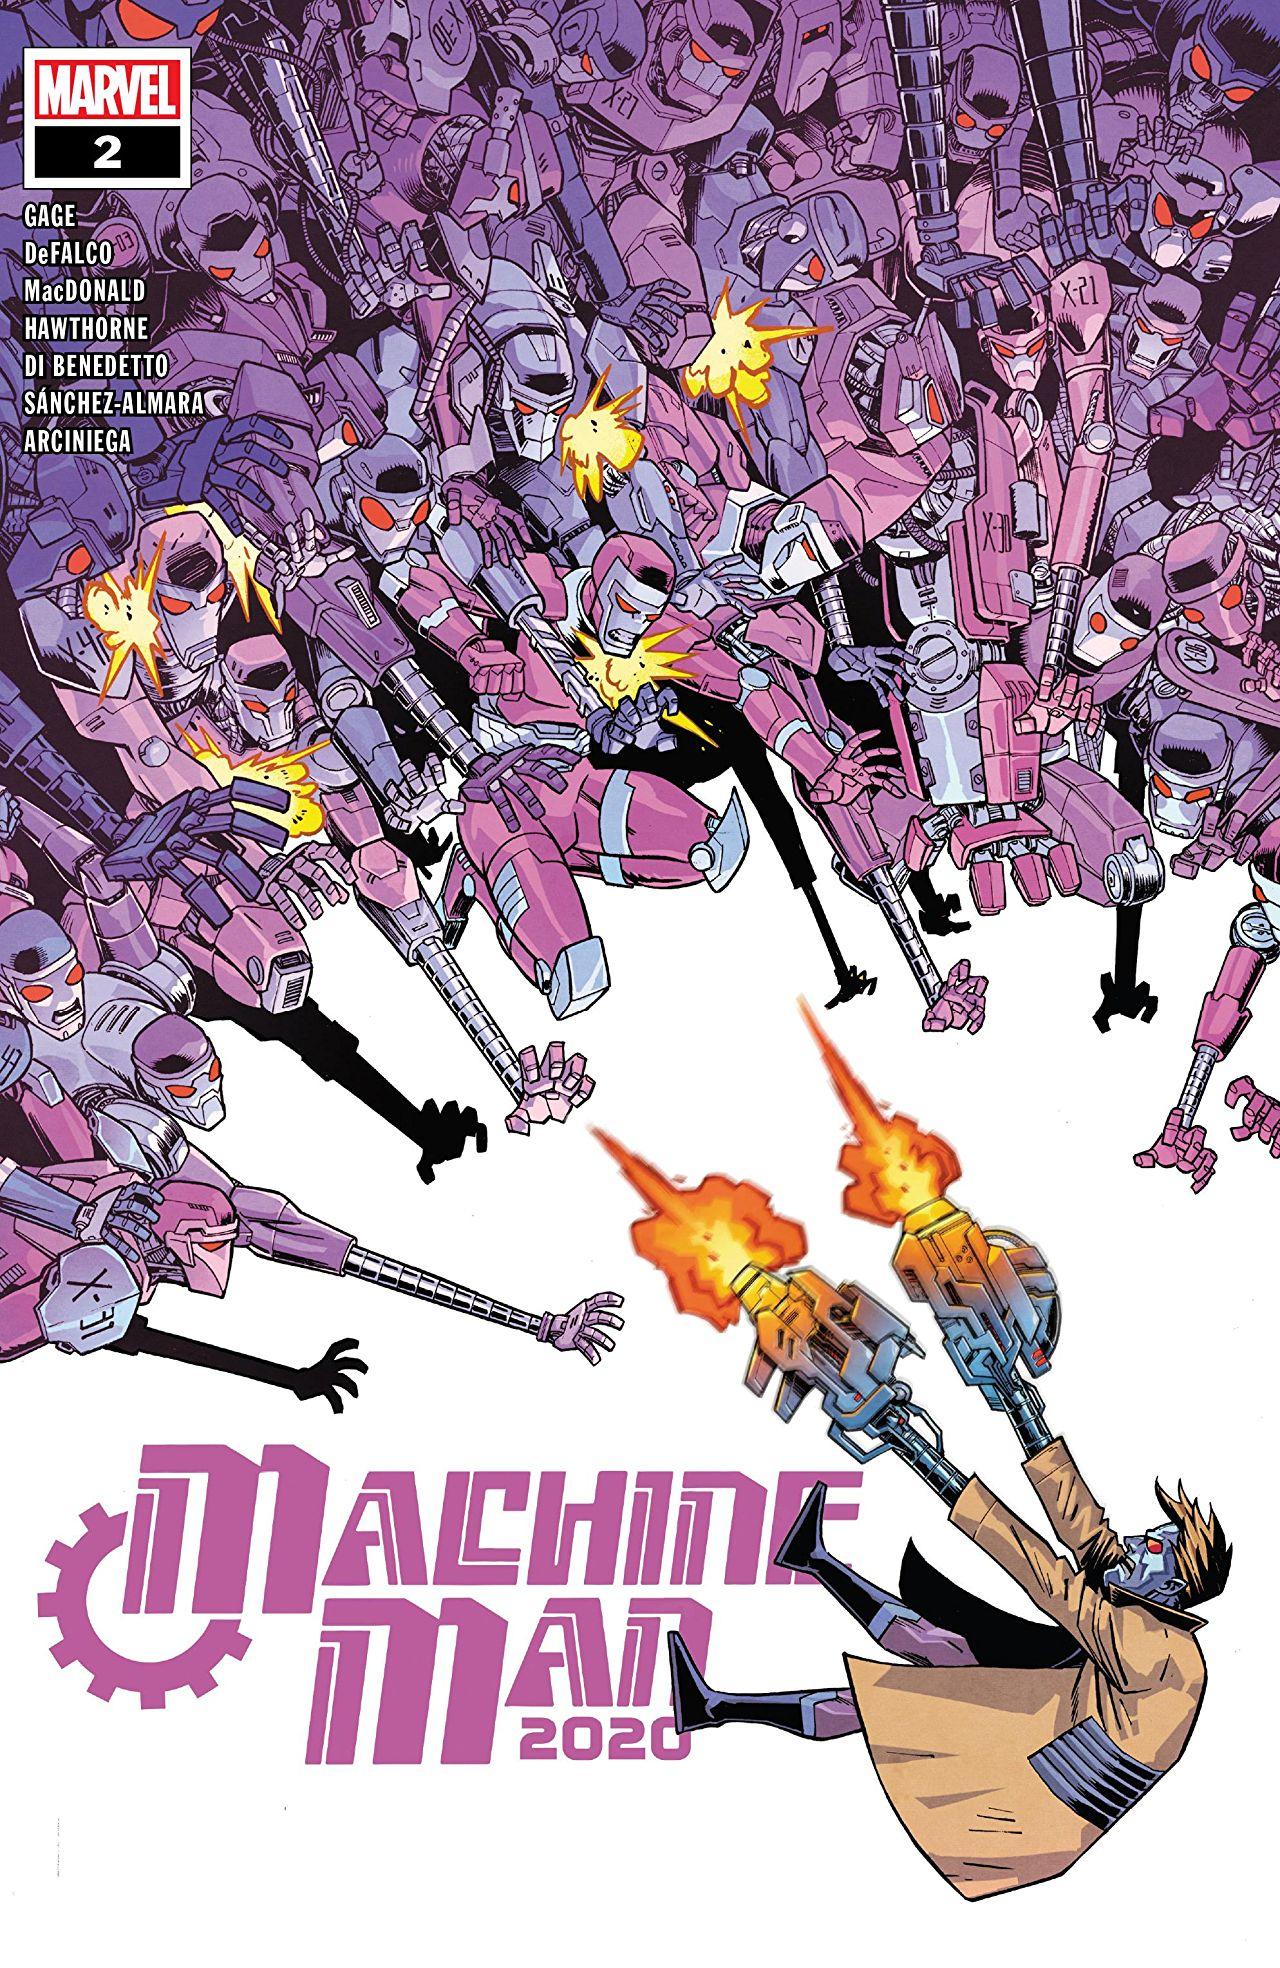 2020 Machine Man Vol. 1 #2